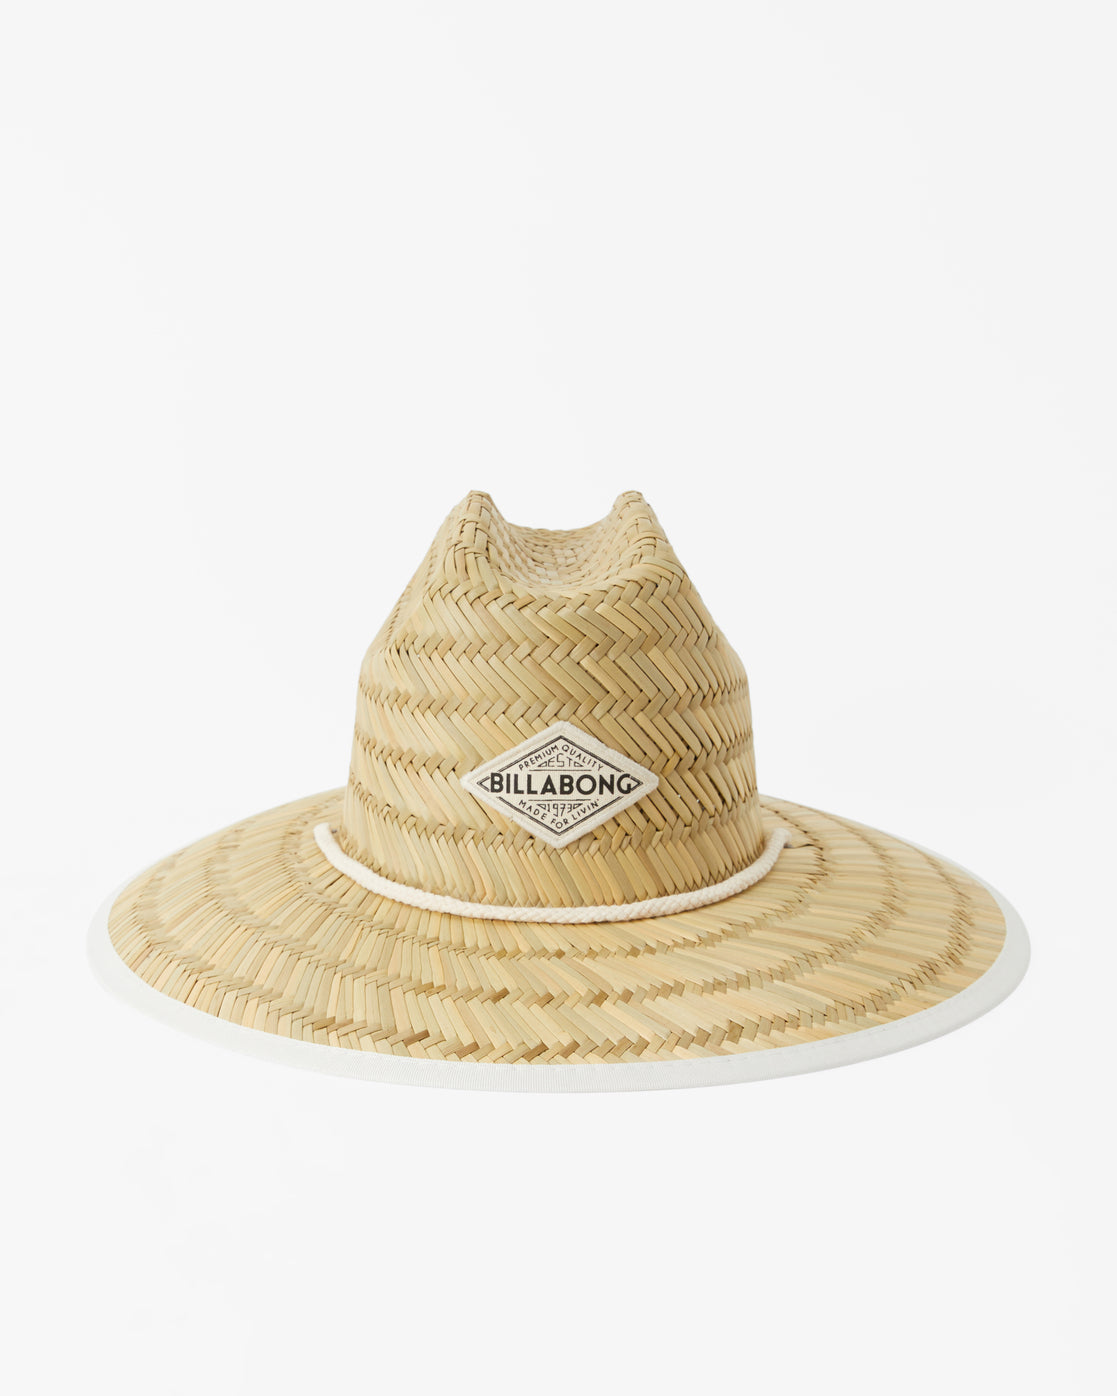 Tipton Straw Lifeguard Hat - Lilac Breeze